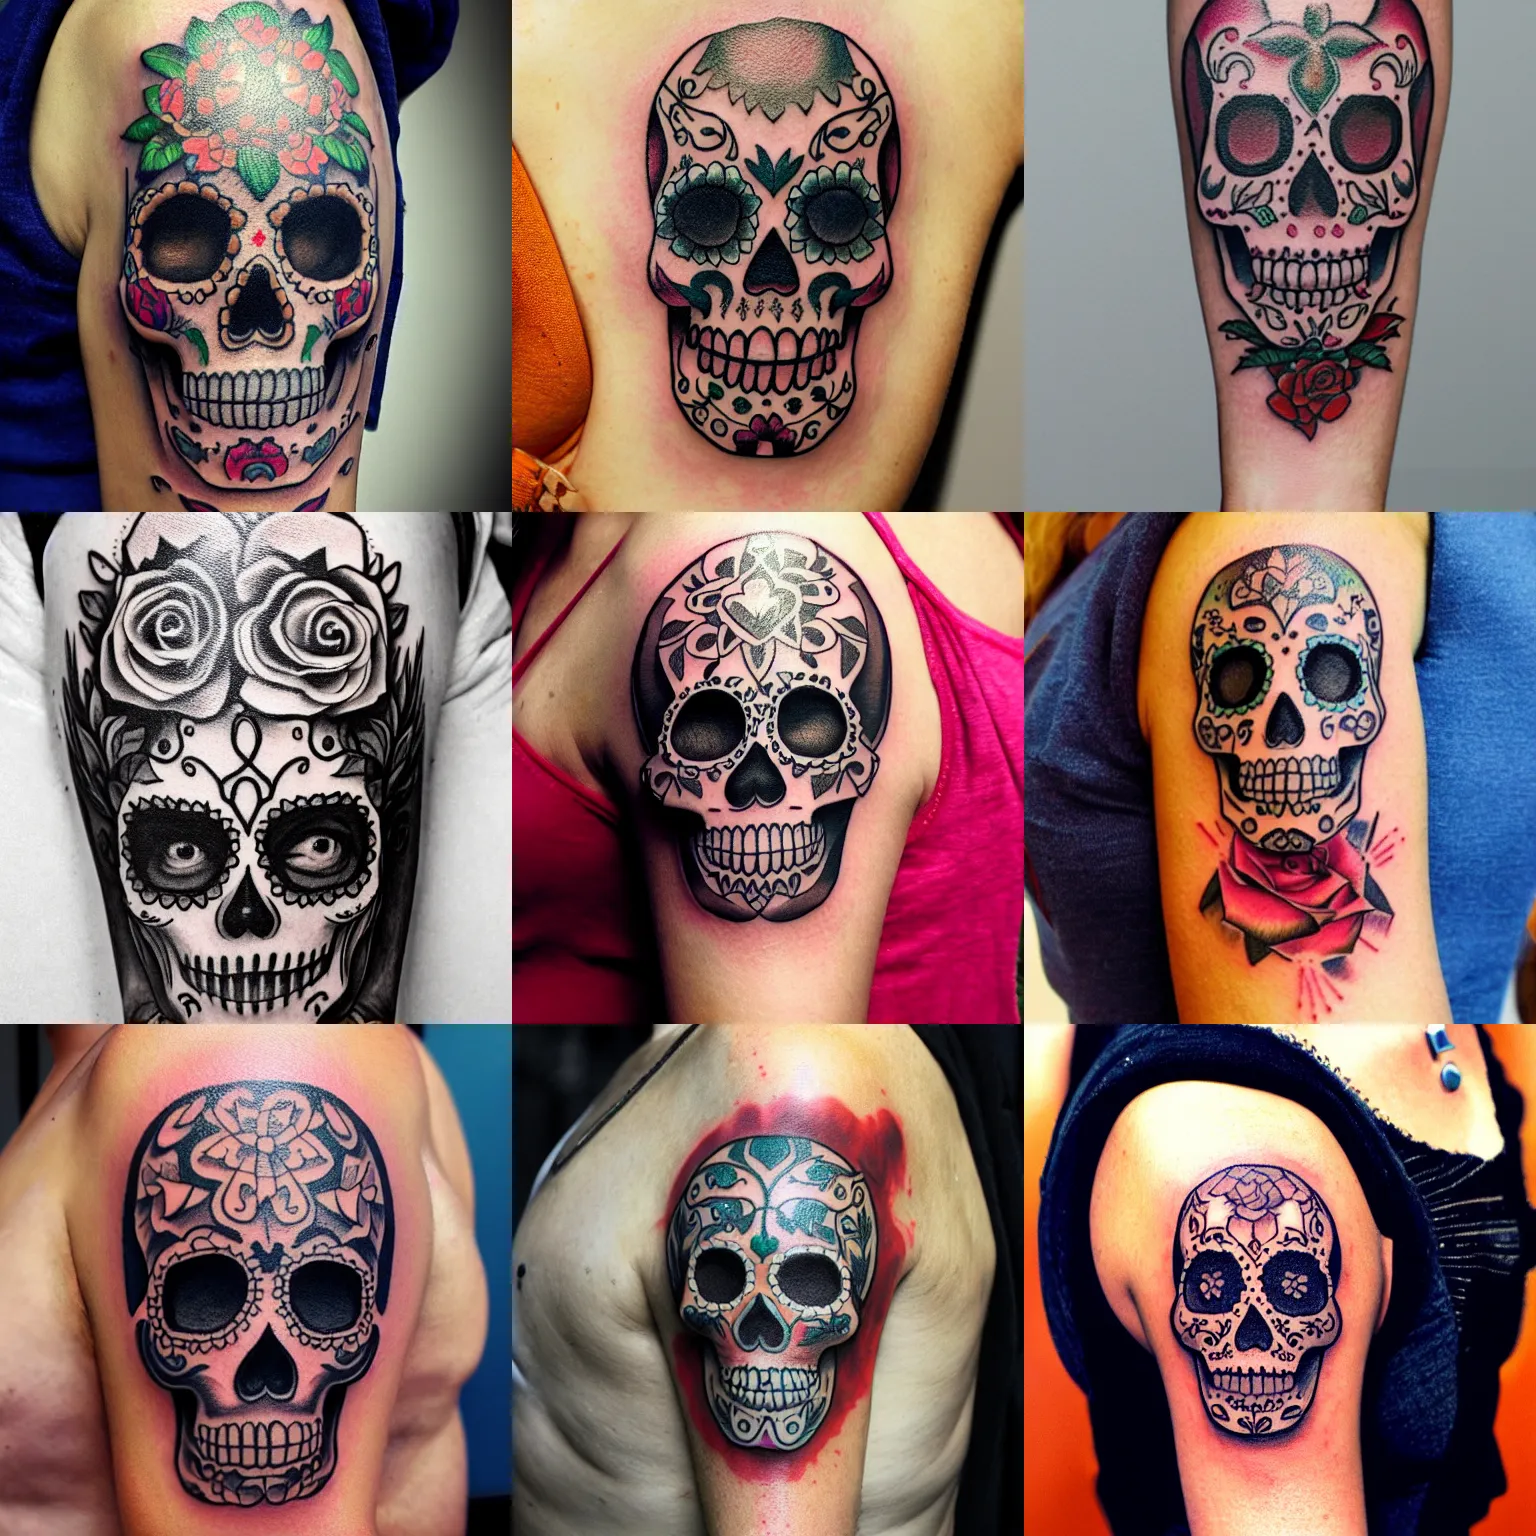 I will design a skull tattoo in black and white - Tattoo Ideas